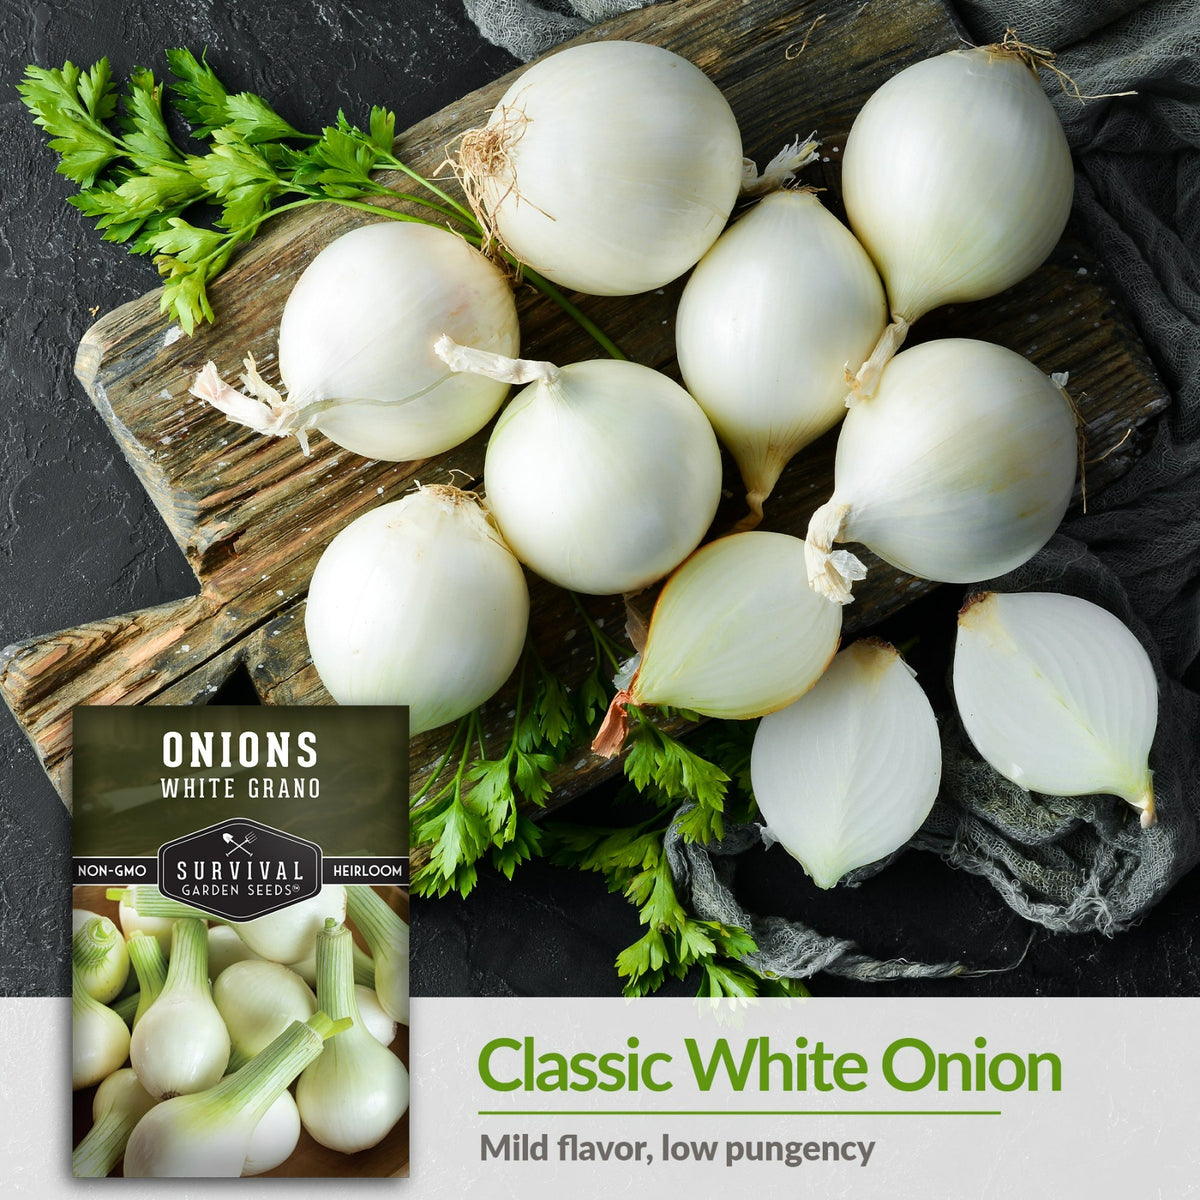 White Grano is a classic white onion with mild flavor